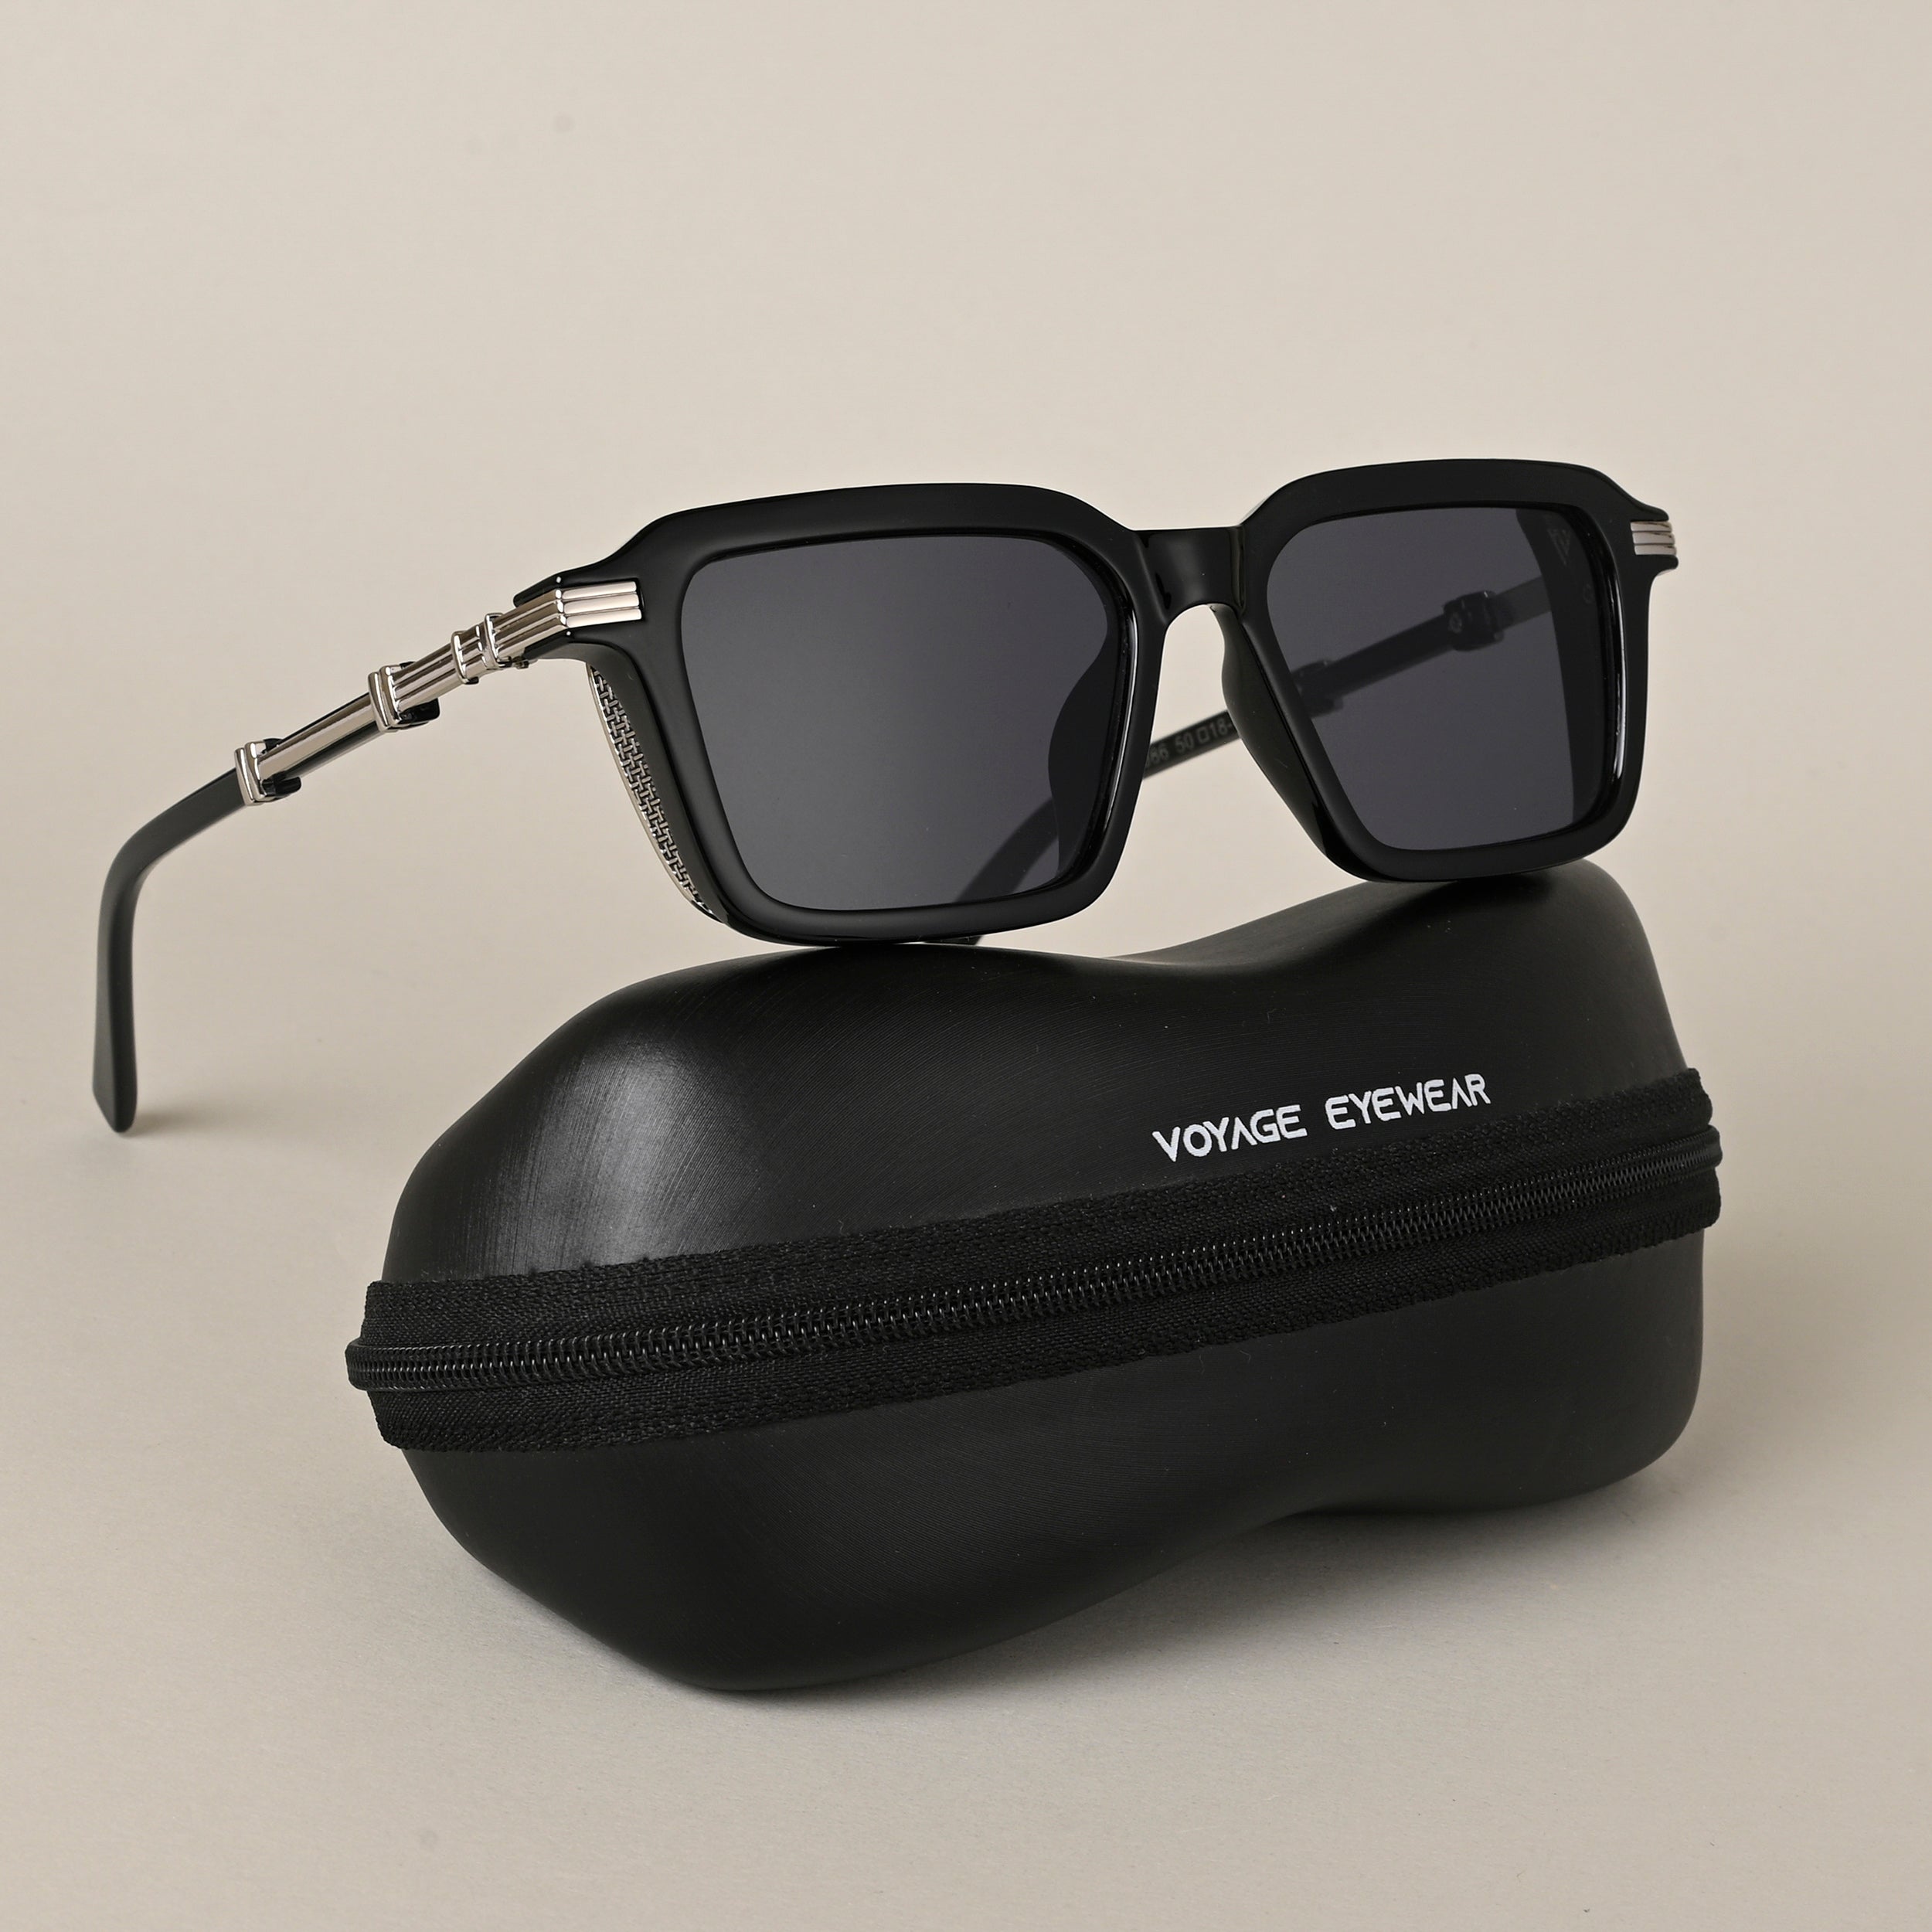 Voyage Black Wayfarer Sunglasses for Men & Women - MG4568